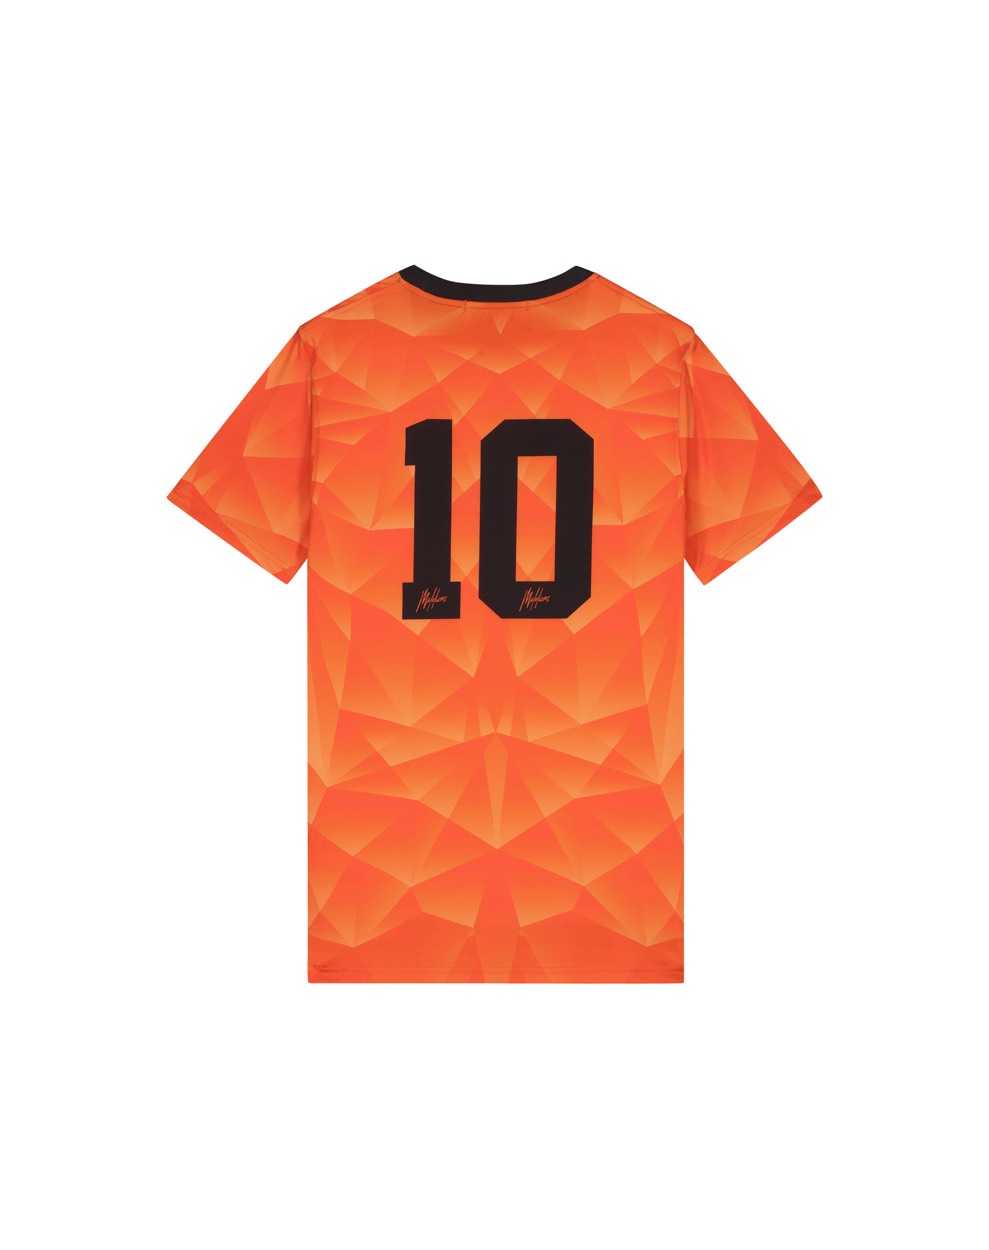 Malelions Wk22 Gradient T-shirt - Oranje